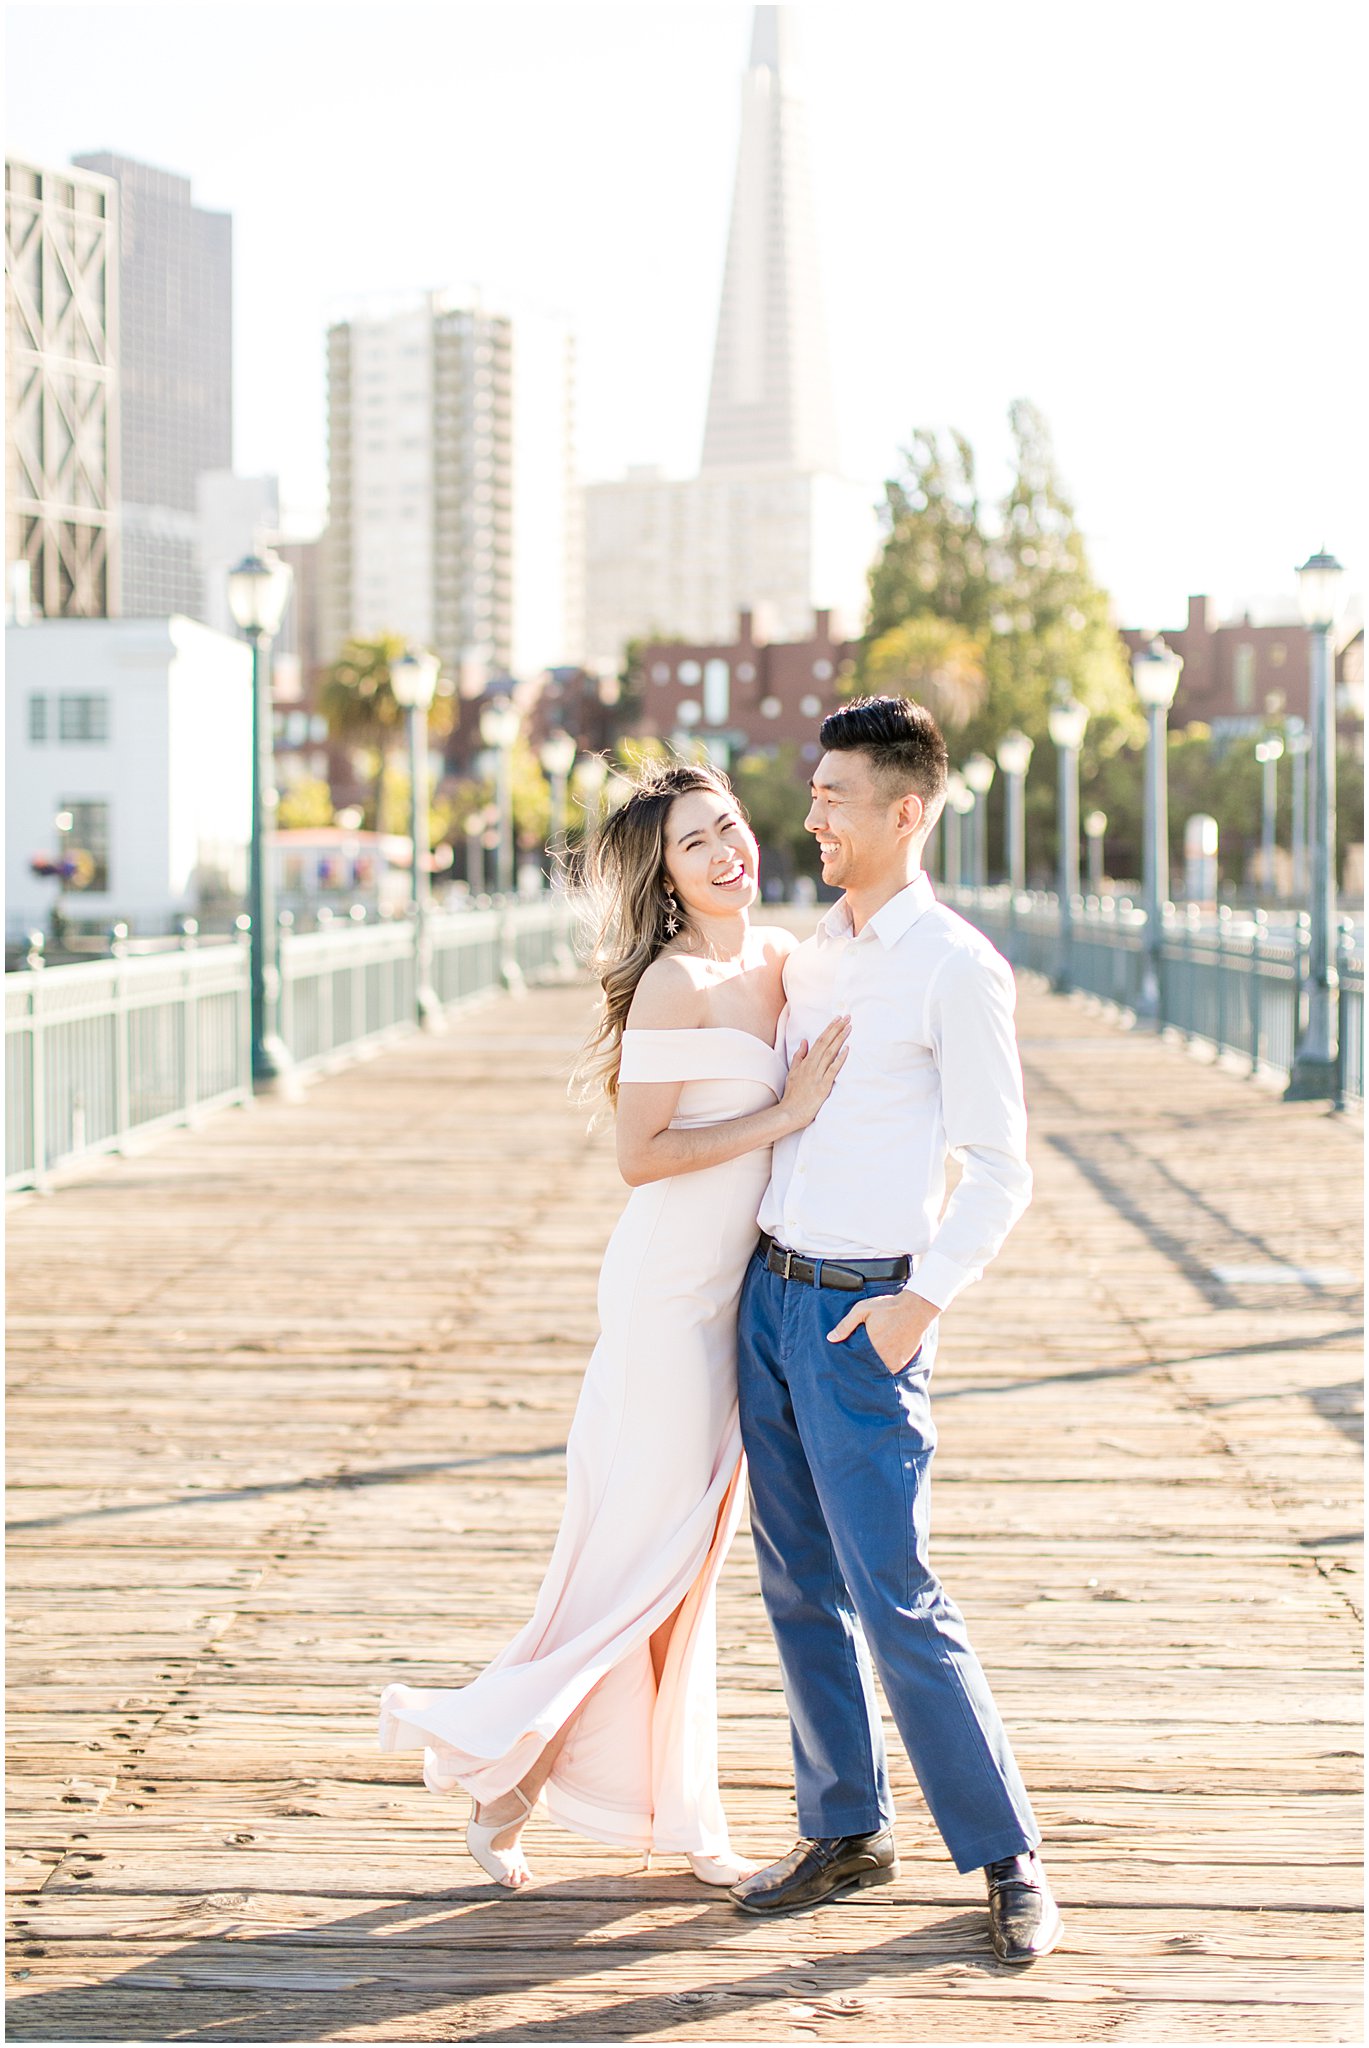 San Francisco Engagement Photos - Bay Area Wedding Photographer - Angela Sue Photography_0011.jpg